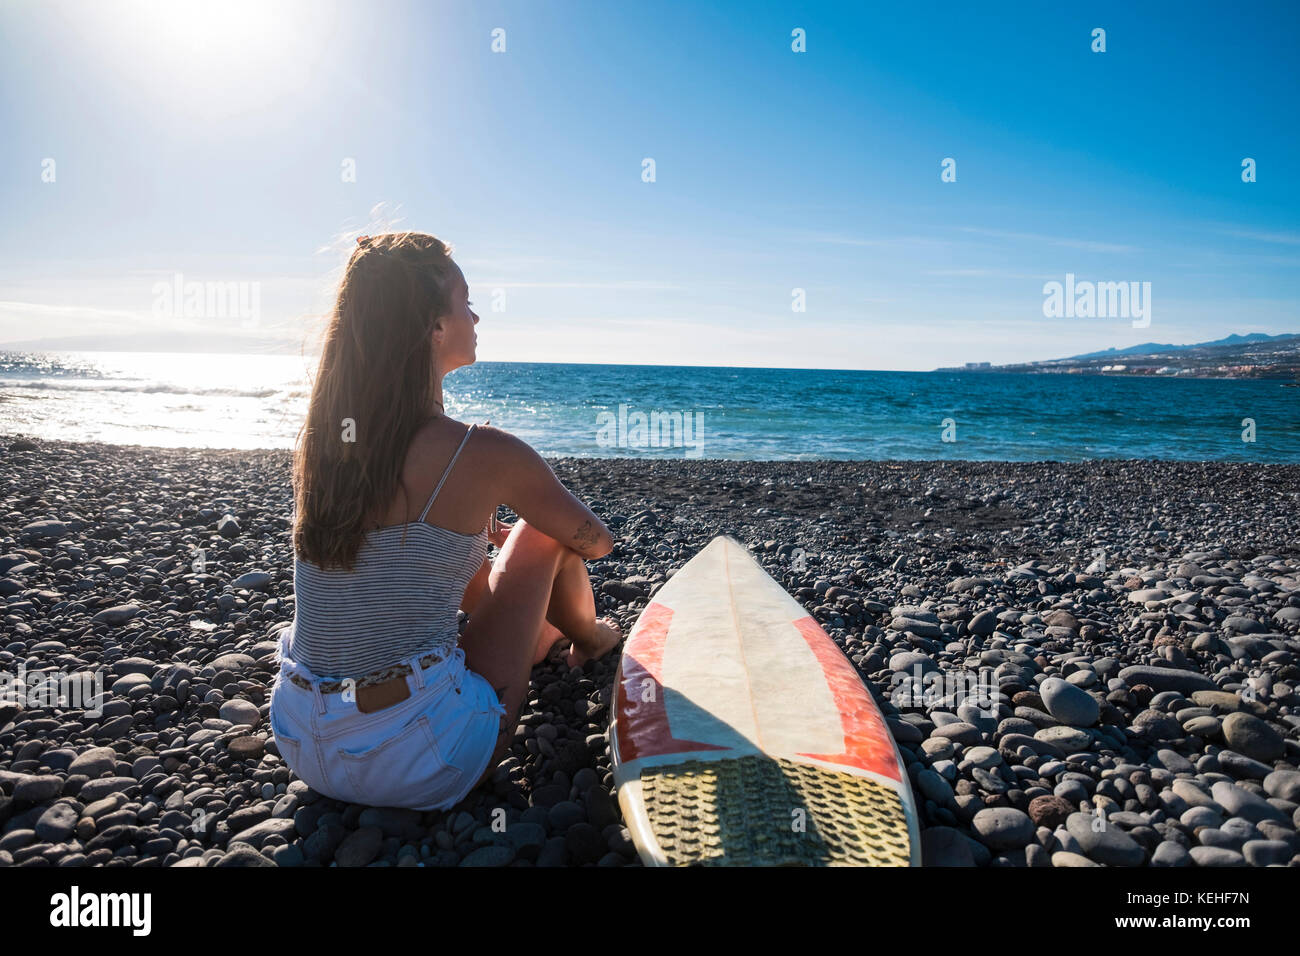 Caucasian woman sitting on beach near surfboard Stock Photo